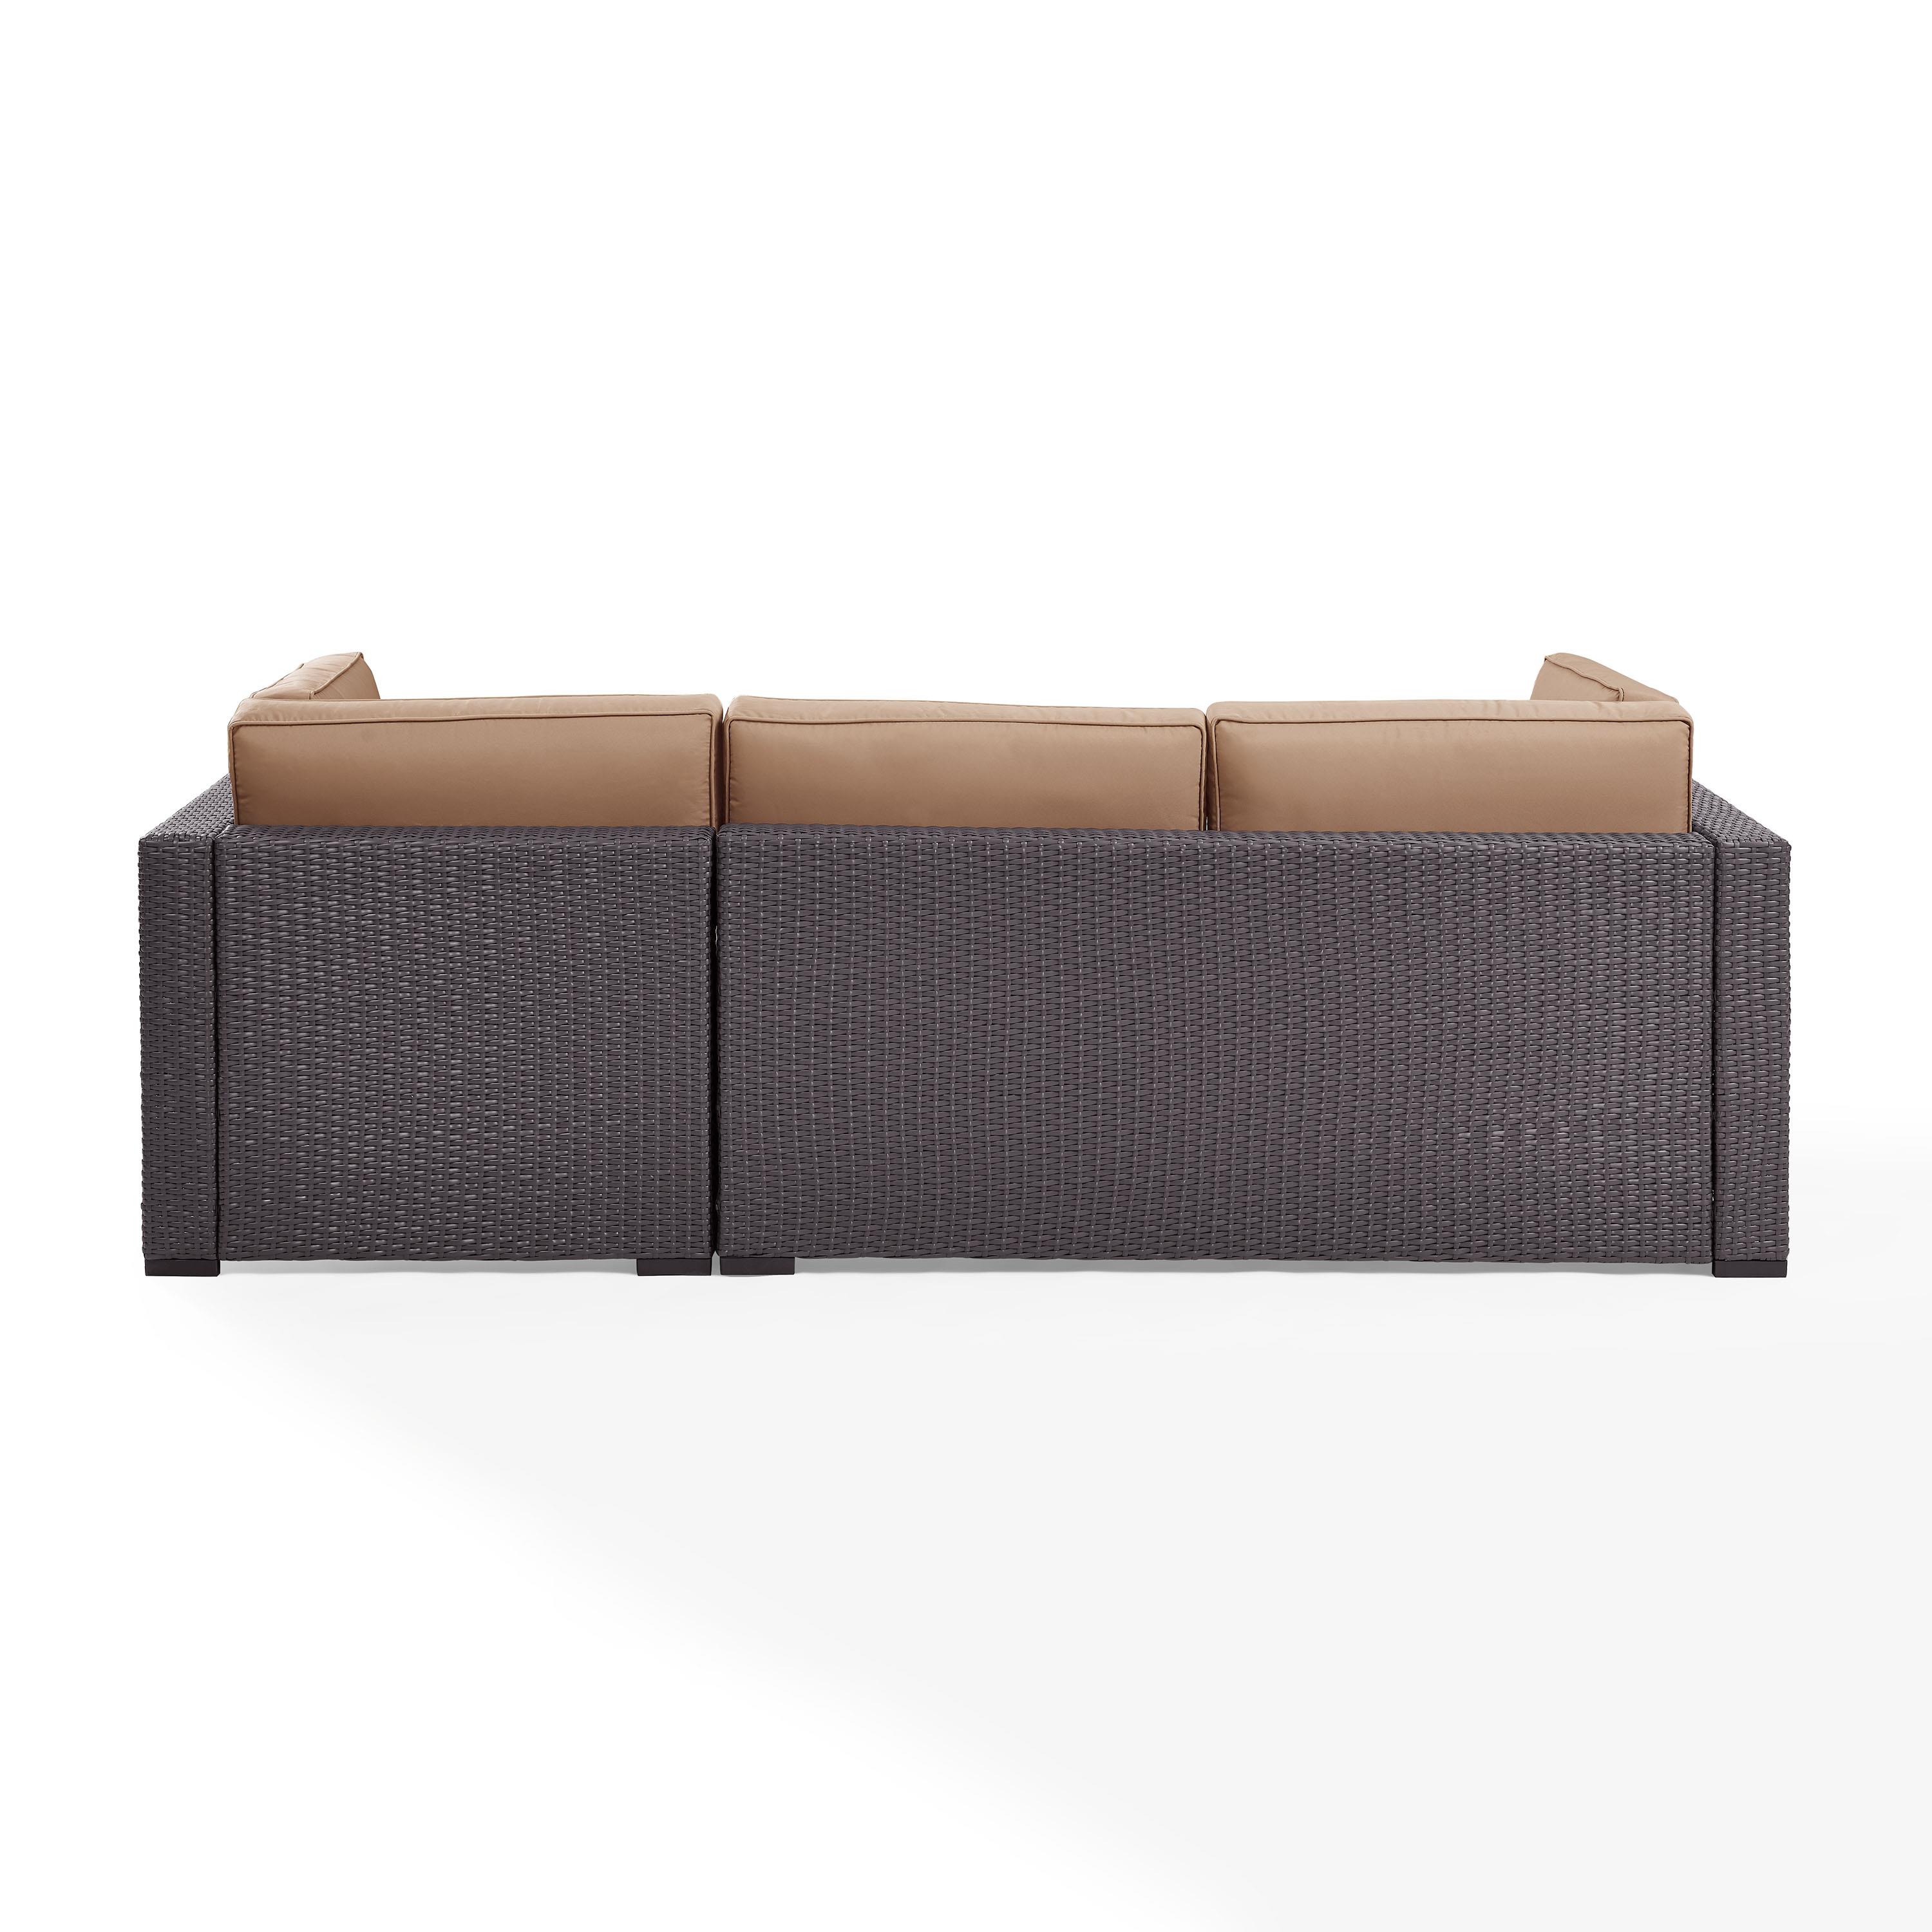 Crosley Furniture Biscayne 3 Piece Metal Patio Sofa Set in Brown/Mocha - image 3 of 4